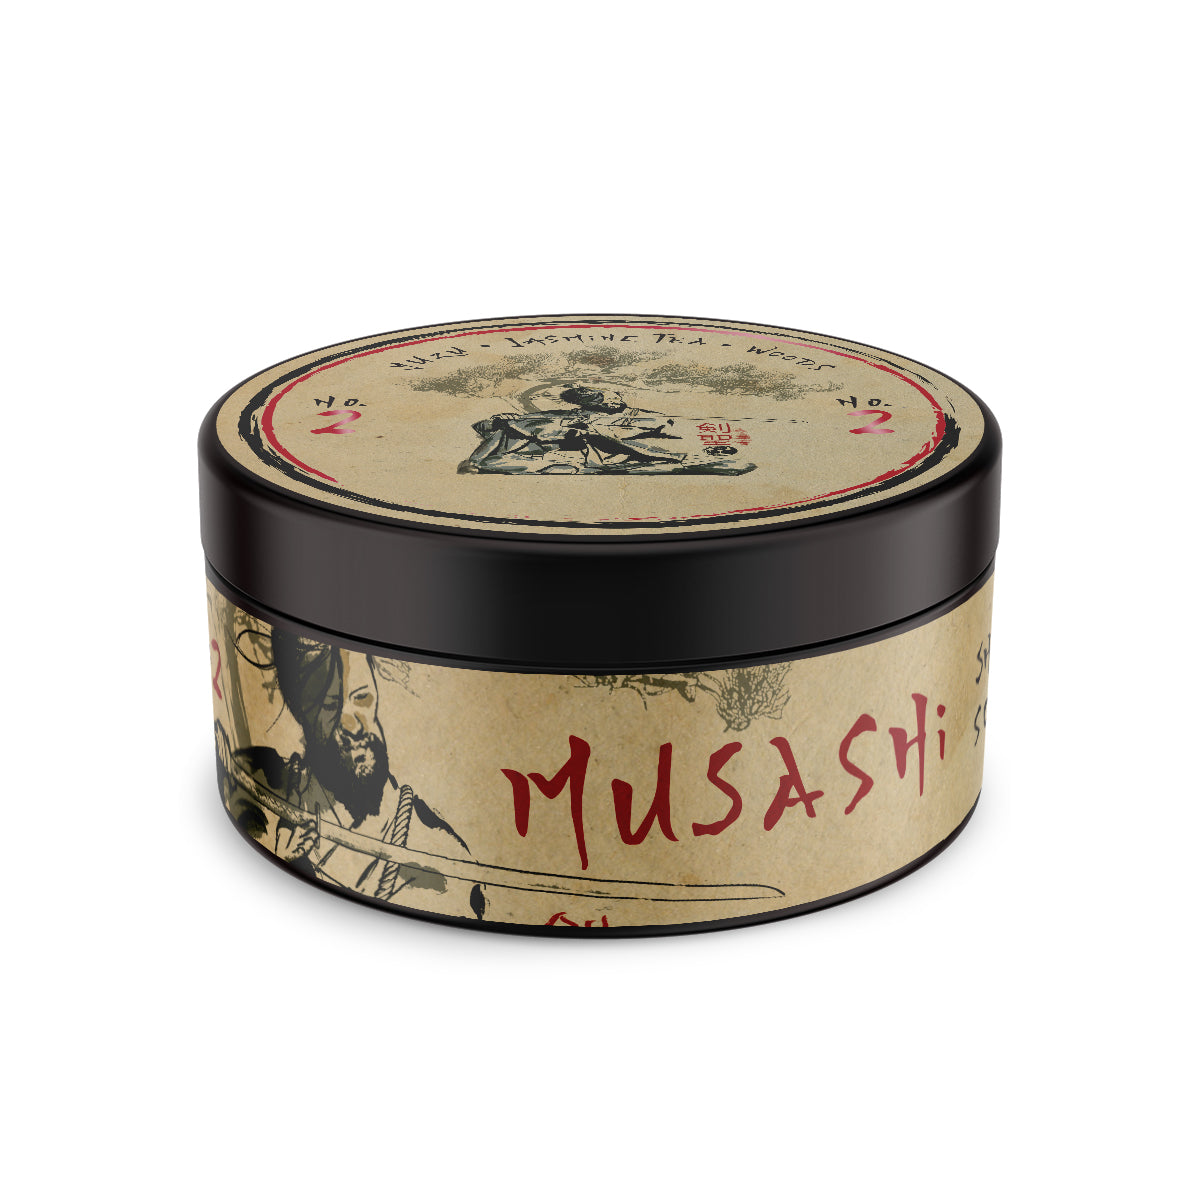 Musashi Origins Series Parfum & Shave Gift Set